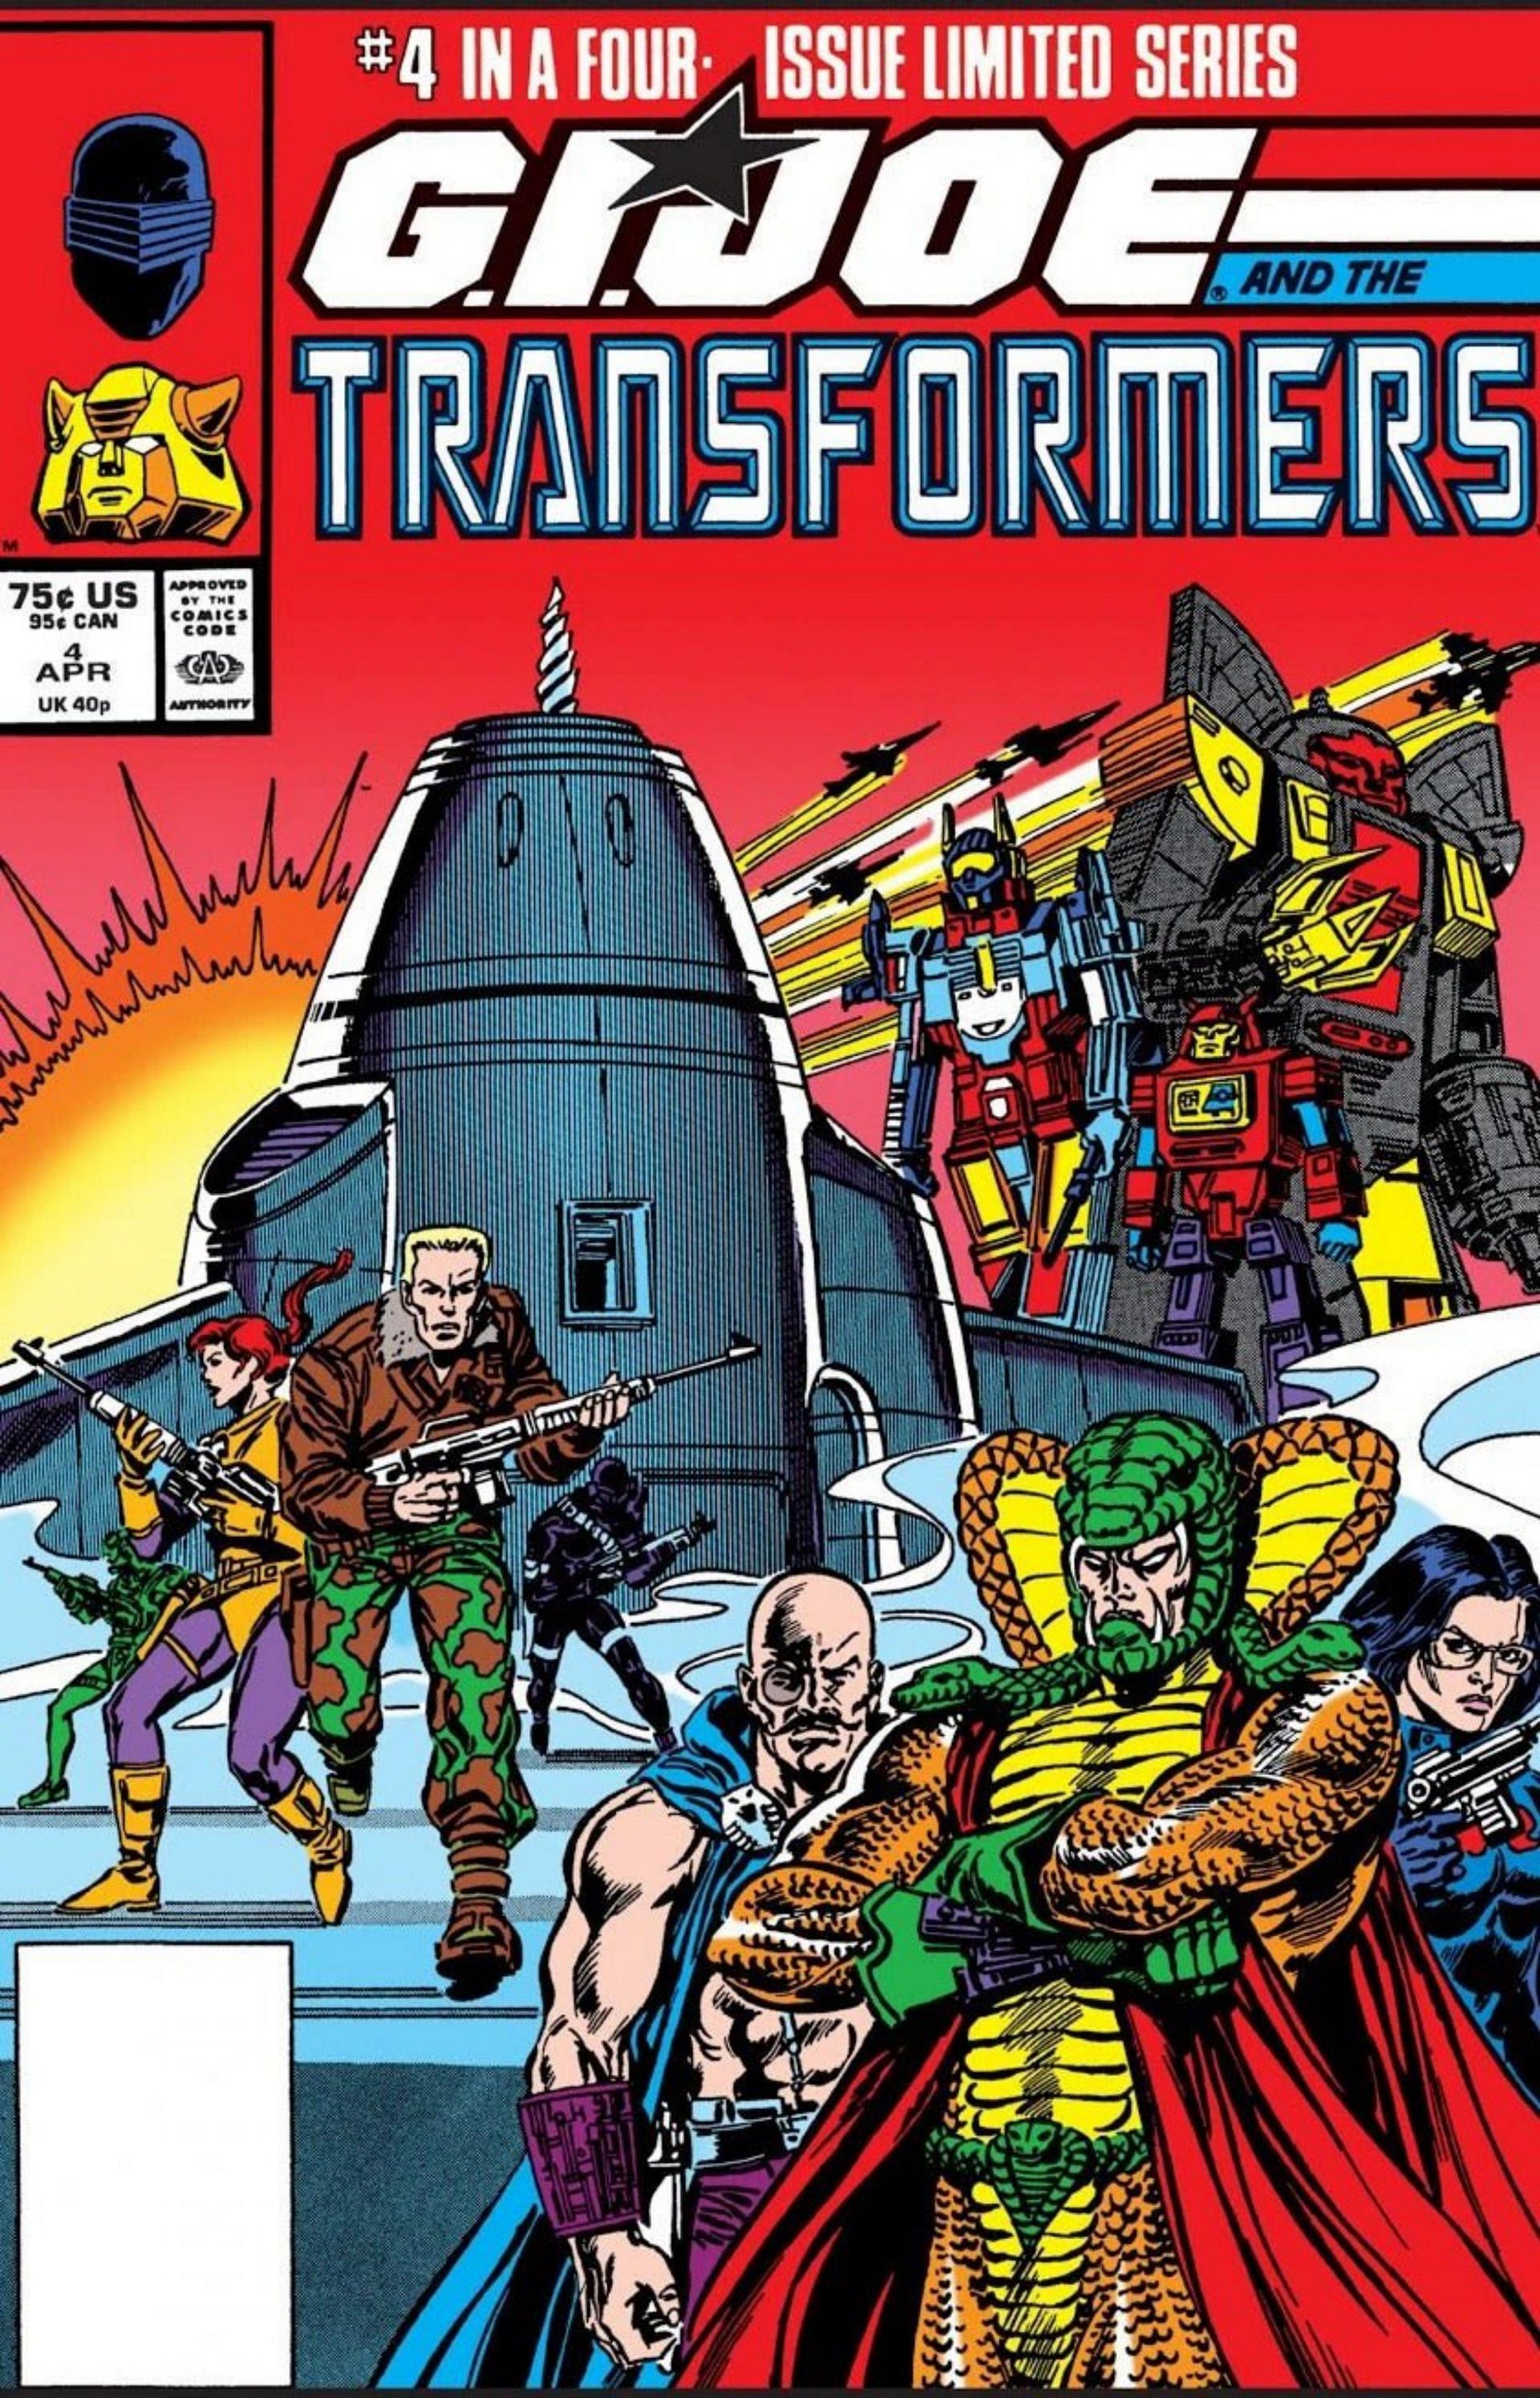 G.I. Joe and Transformers comic book cover (Image via Marvel Comics)